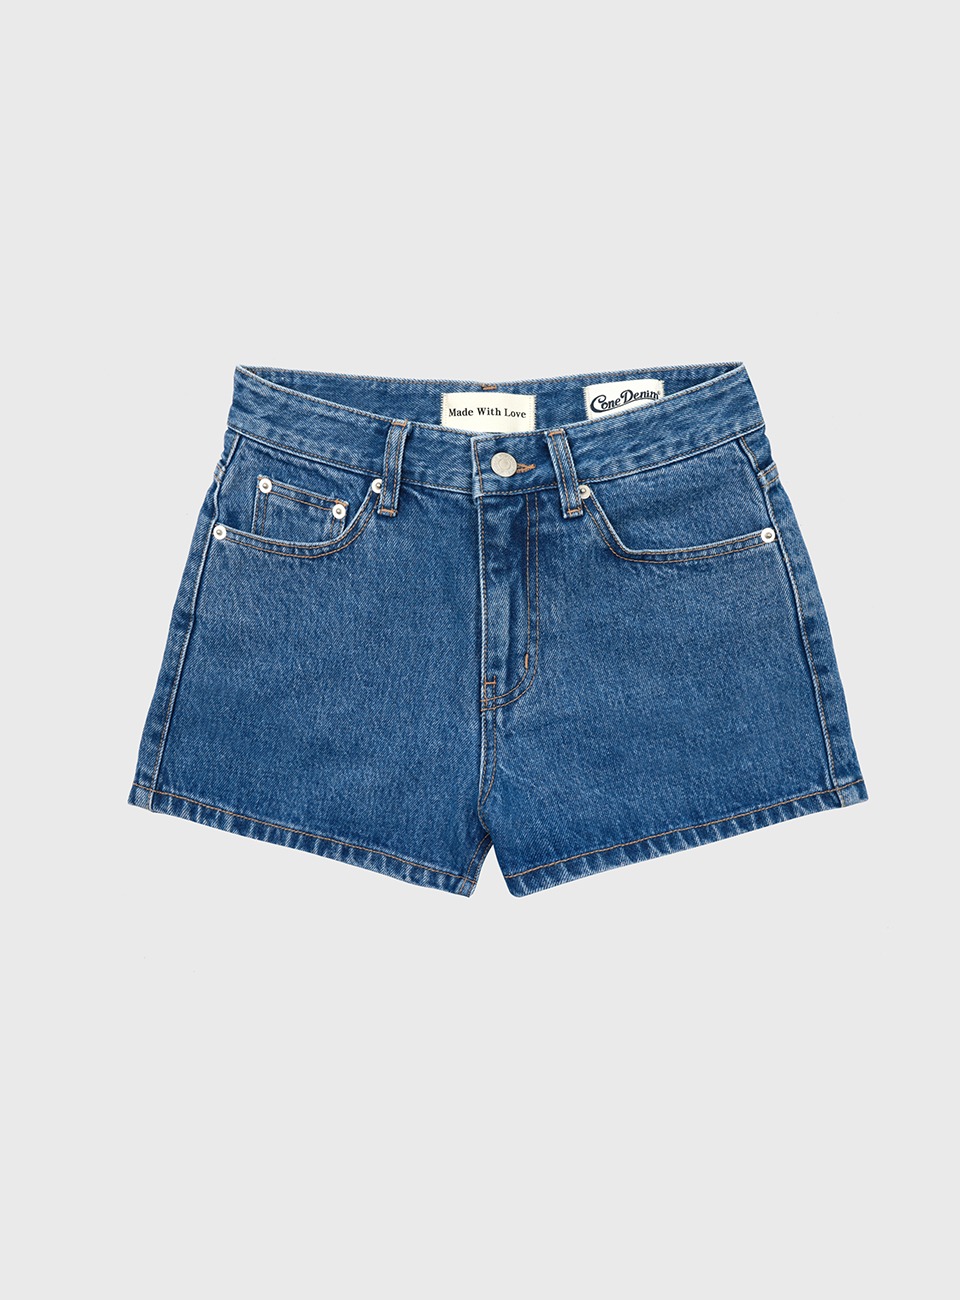 Cone denim shorts(medium blue)